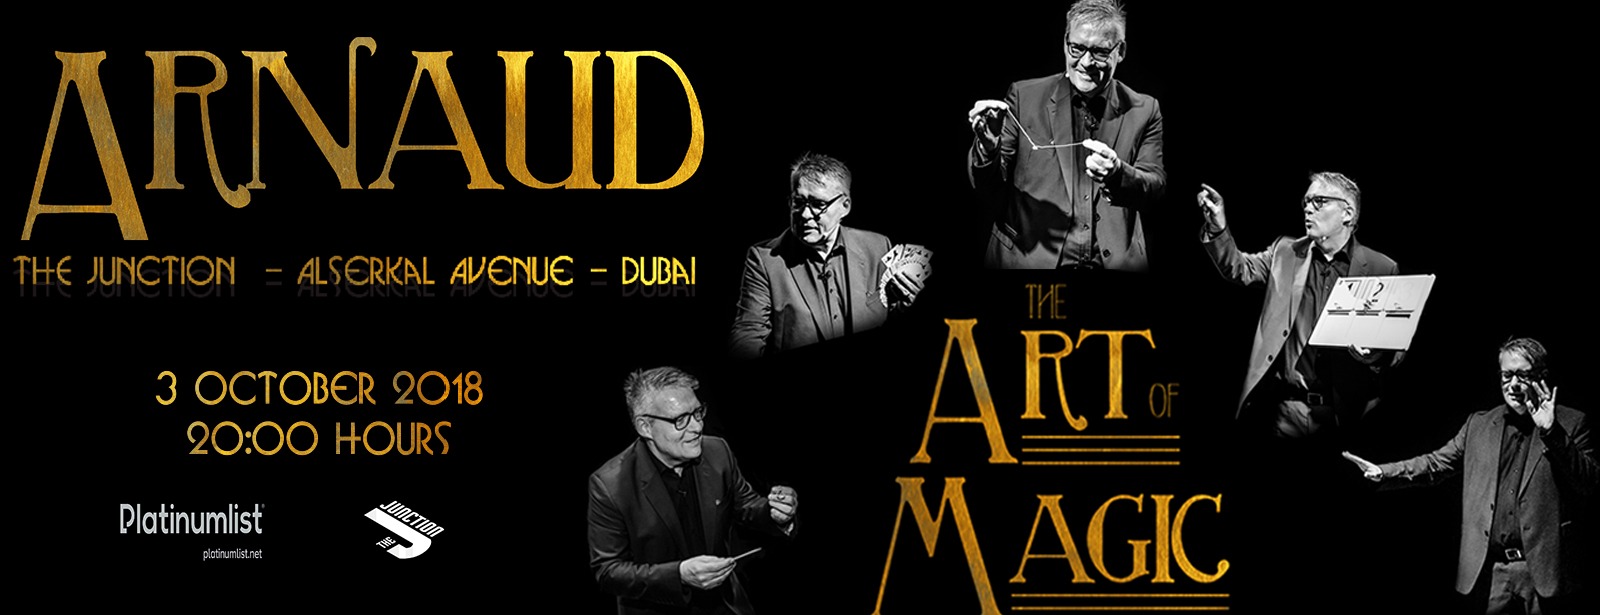 The Art of Magic - Coming Soon in UAE